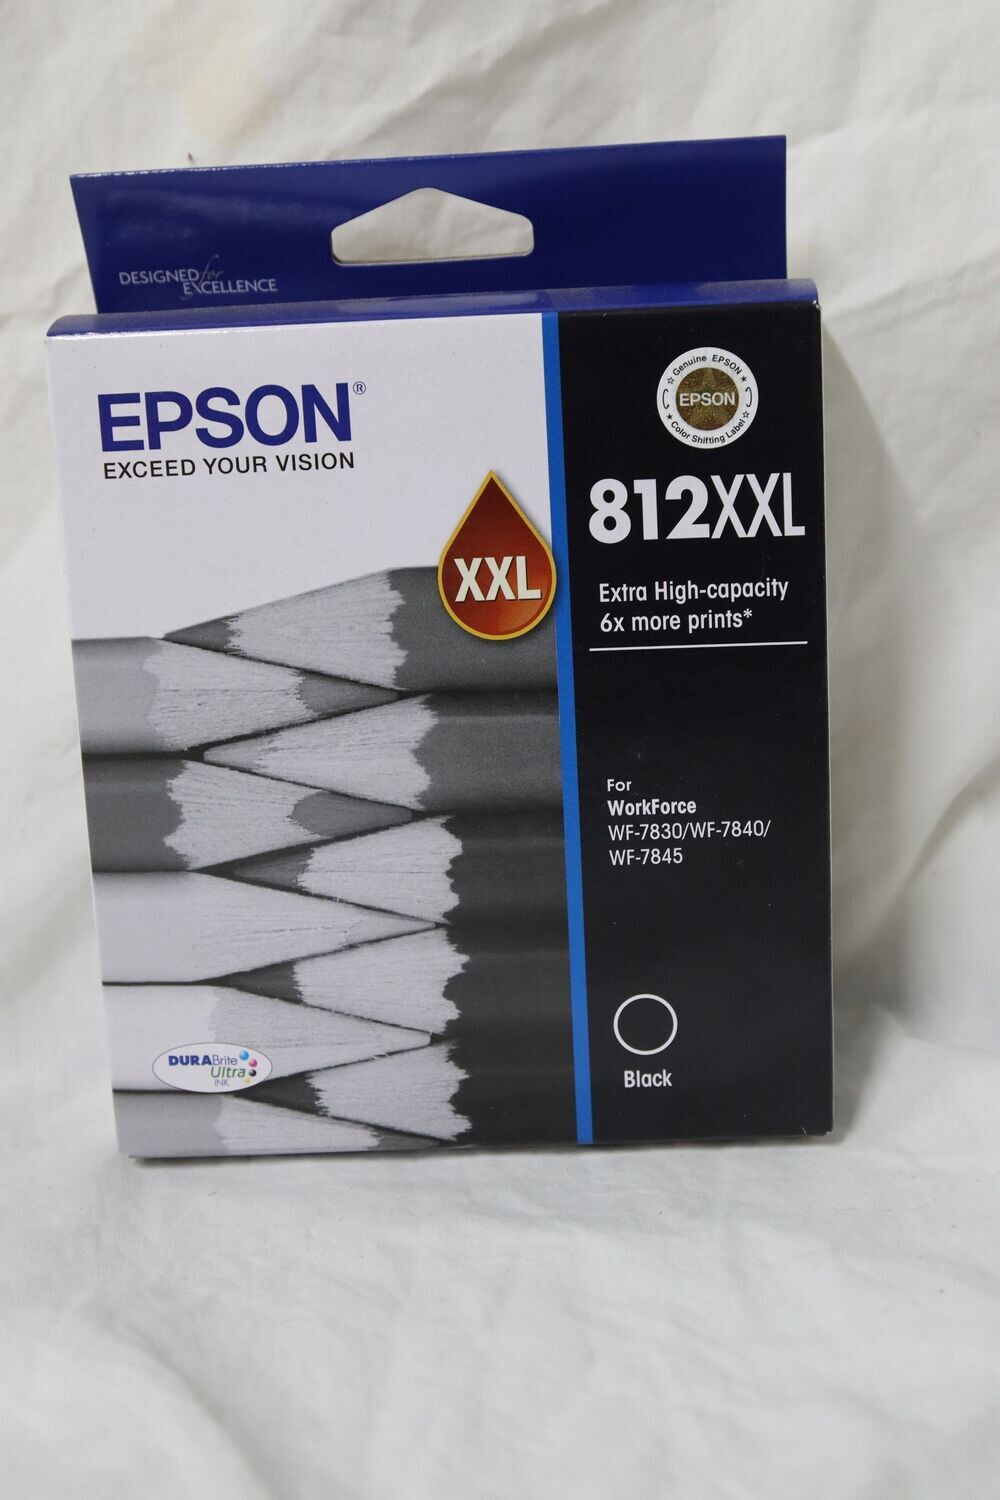 Epson 812XXL Black Ink Cartridge